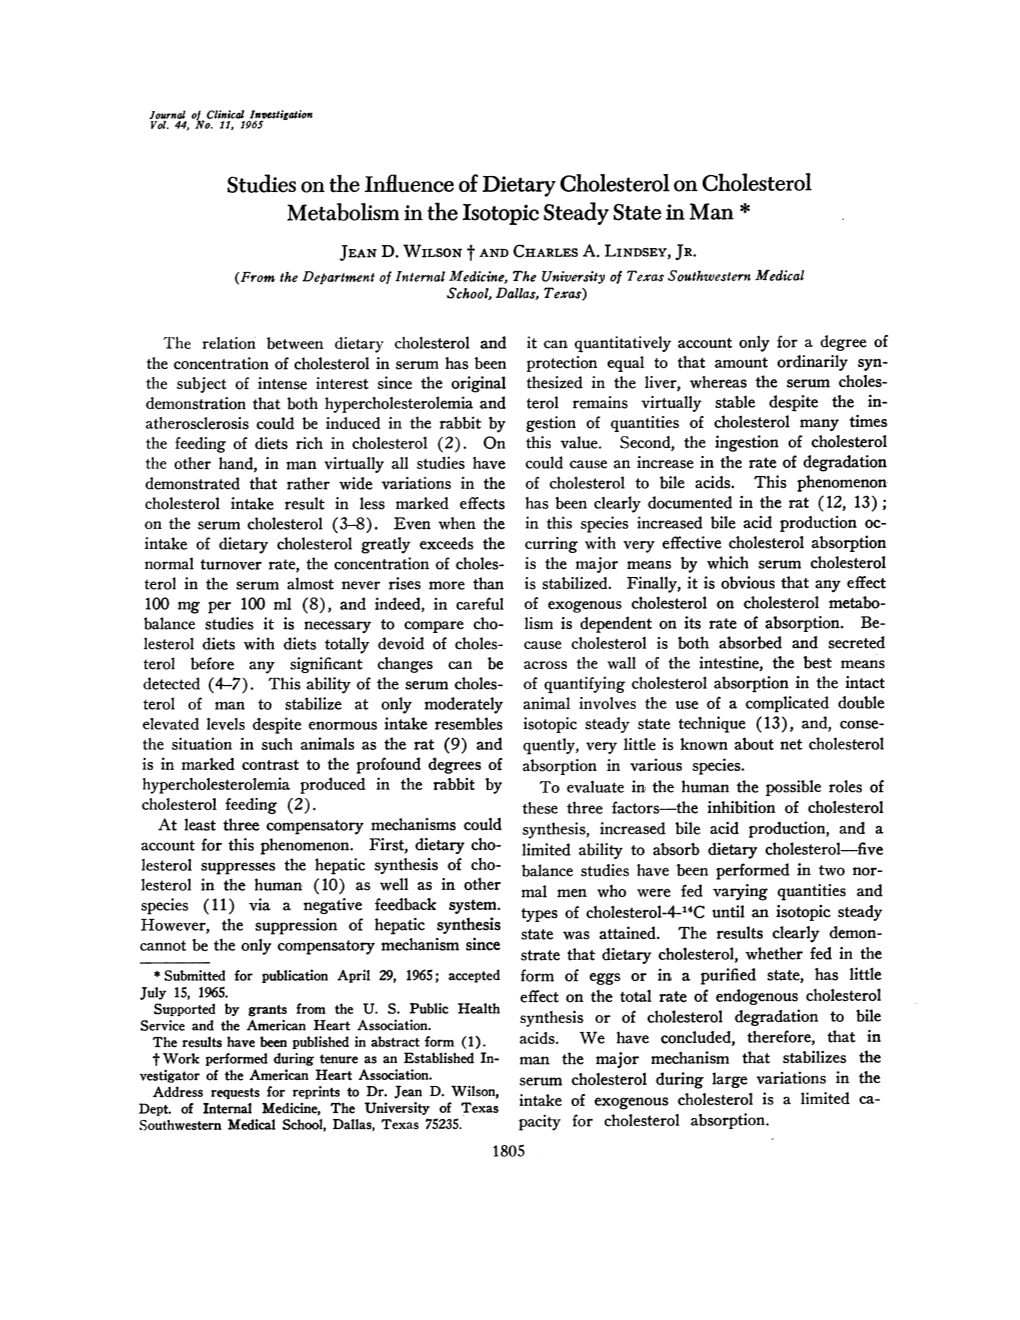 Studies on the Influence Ofdietary Cholesterolon Cholesterol